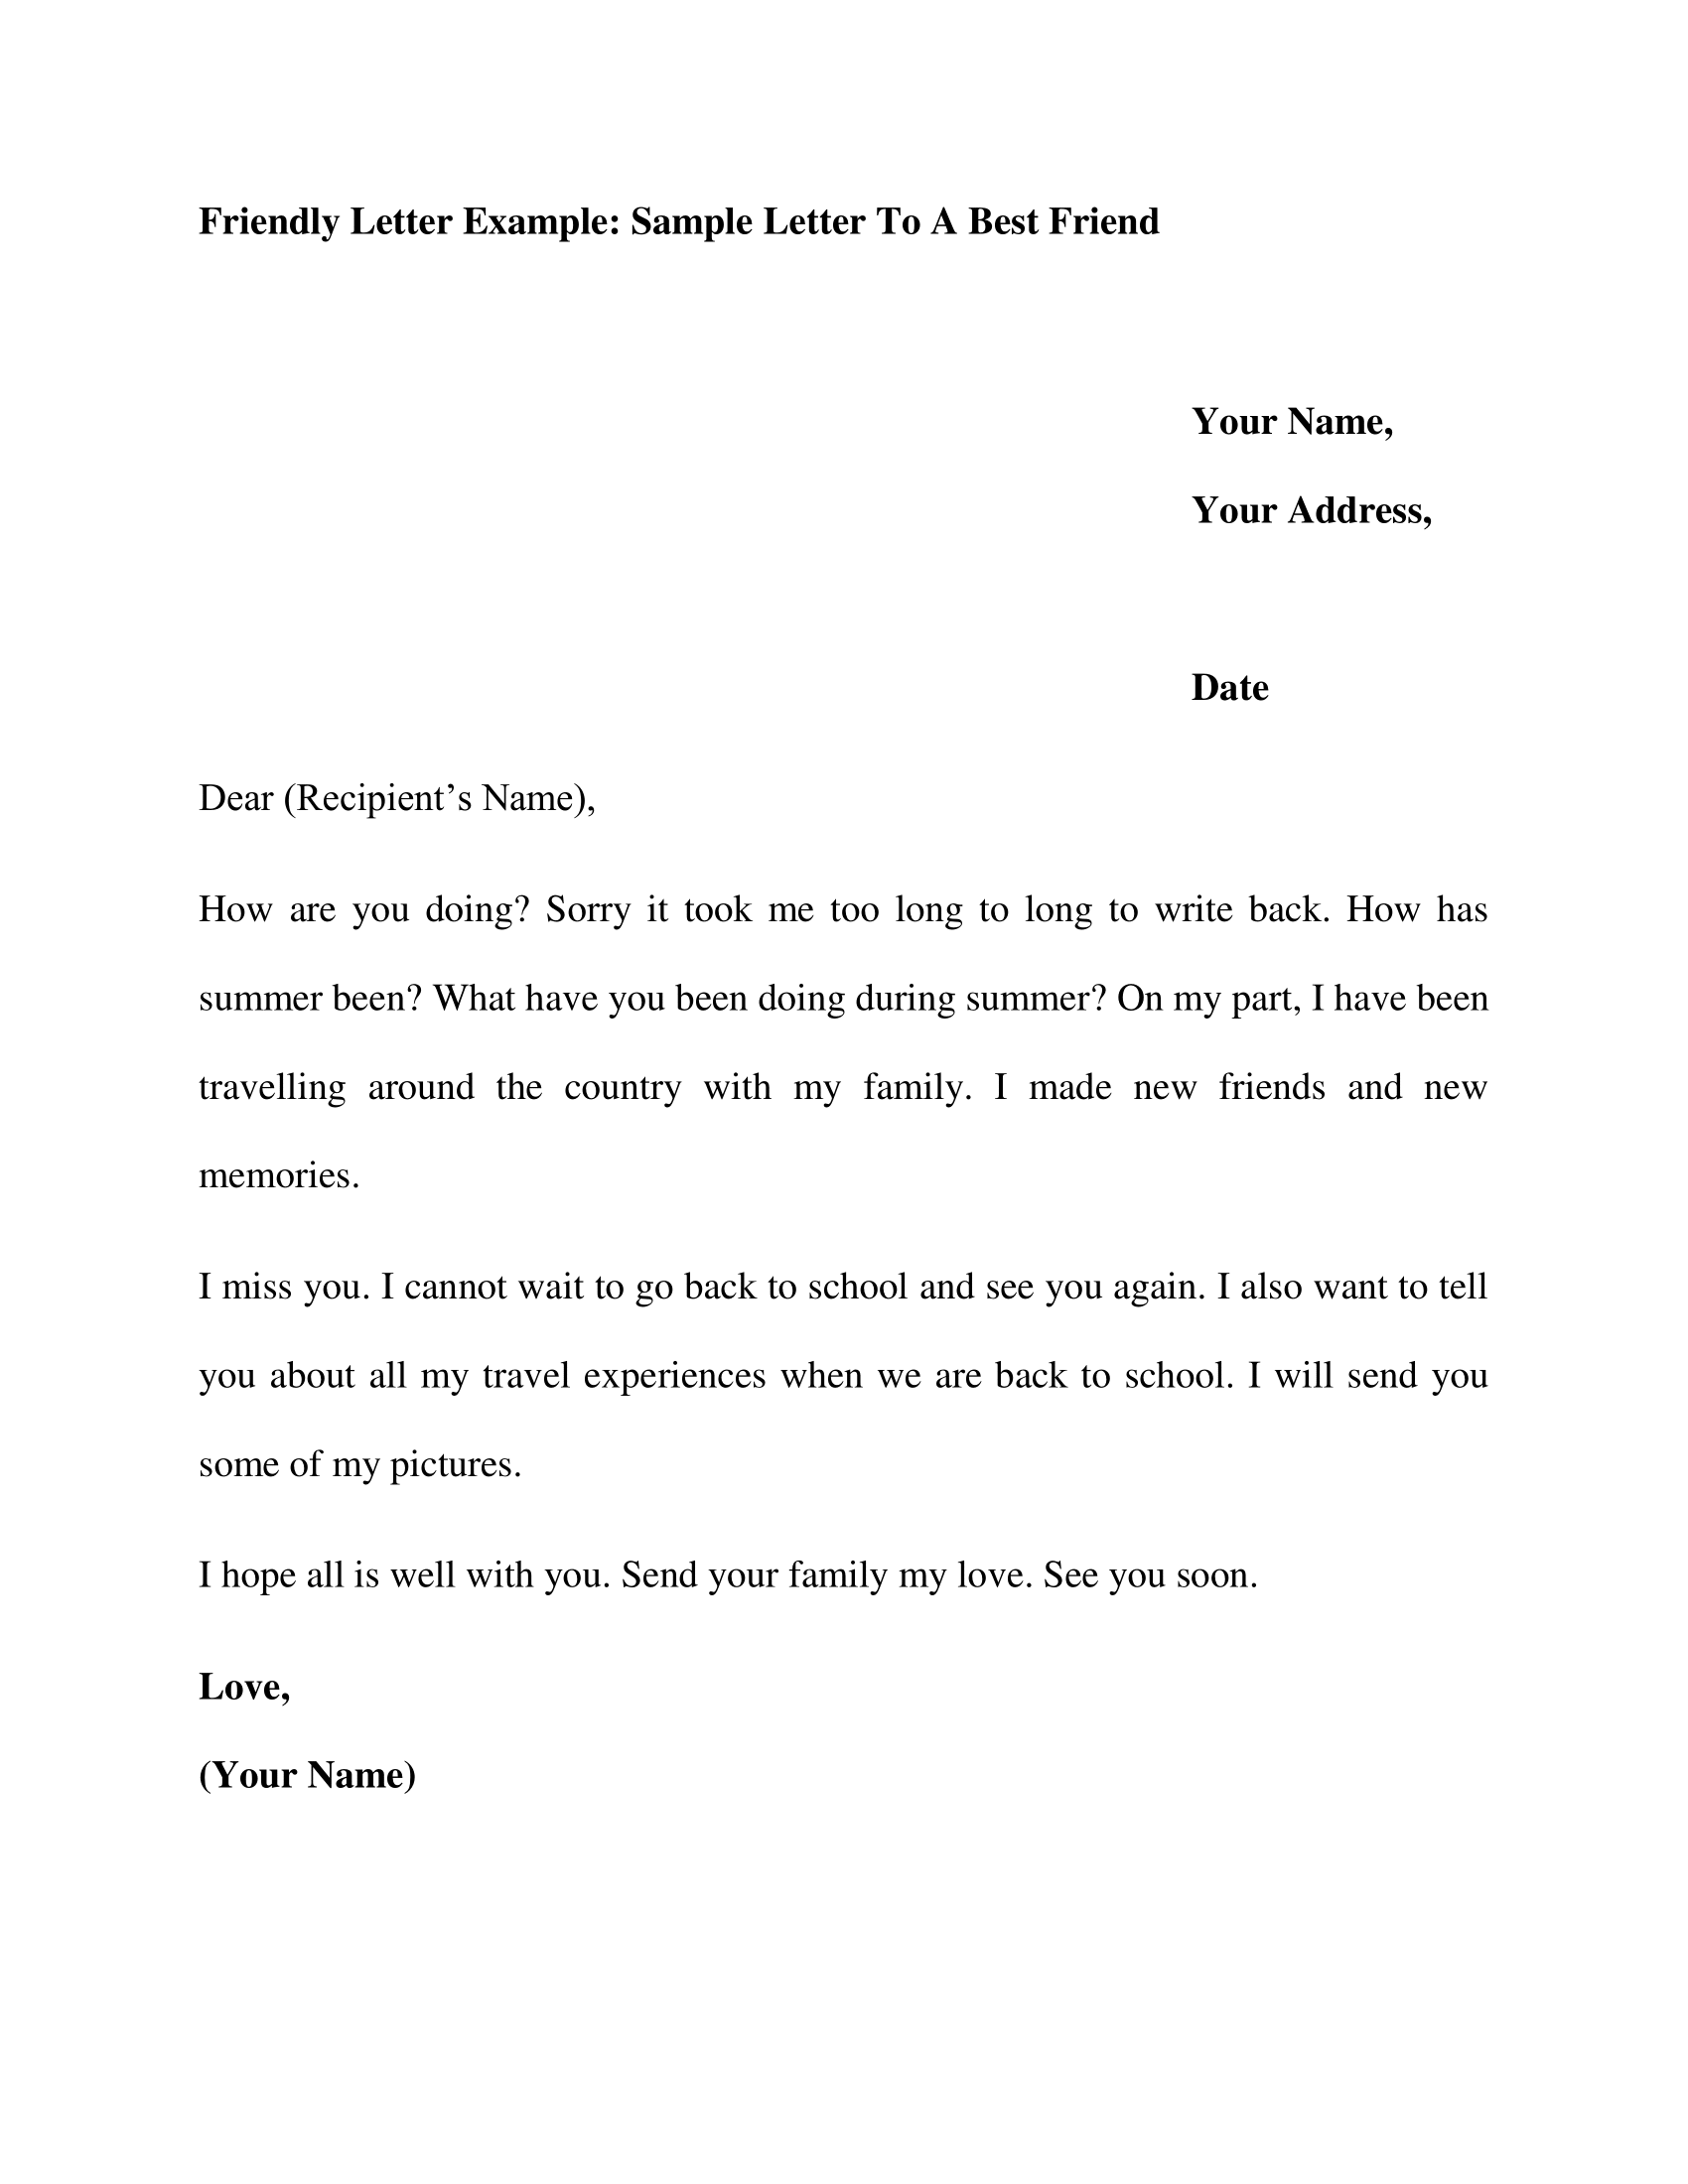 essay friend letter